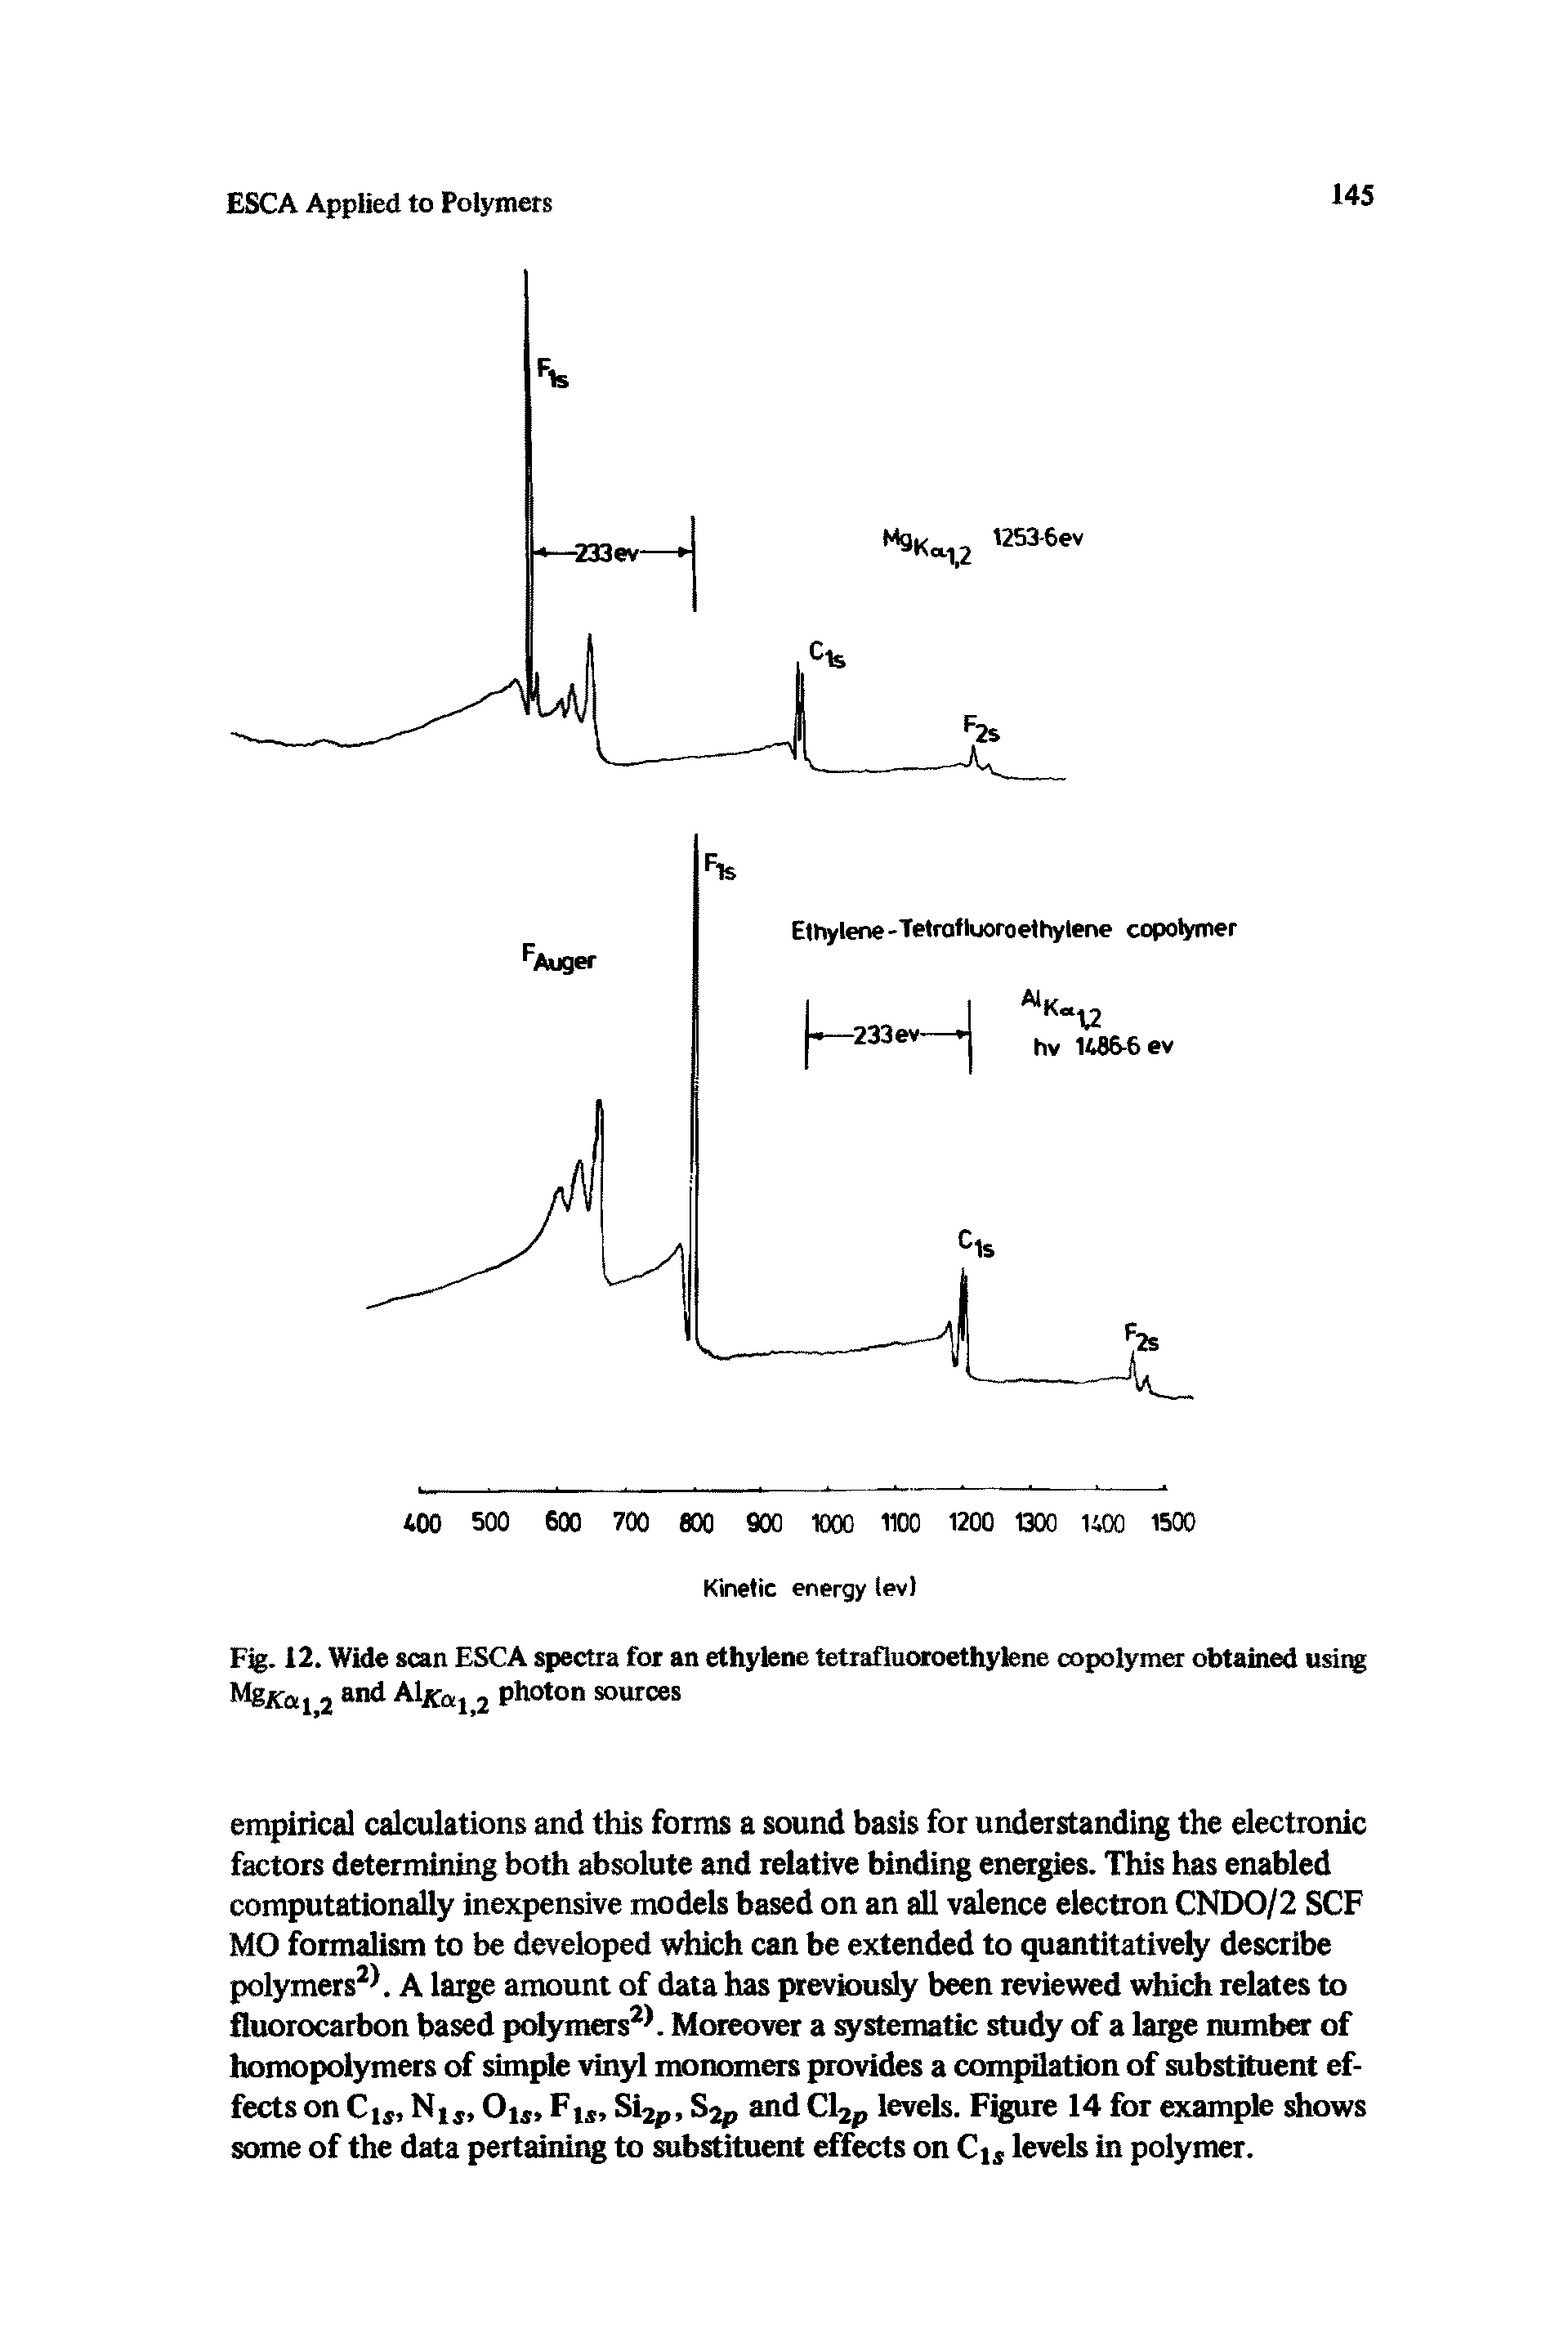 Fig. 12. Wide scan ESCA spectra for an ethylene tetrafluoroethylene copolymer obtained using Mgjfai 2 and Aljcaj 2 photon sources...